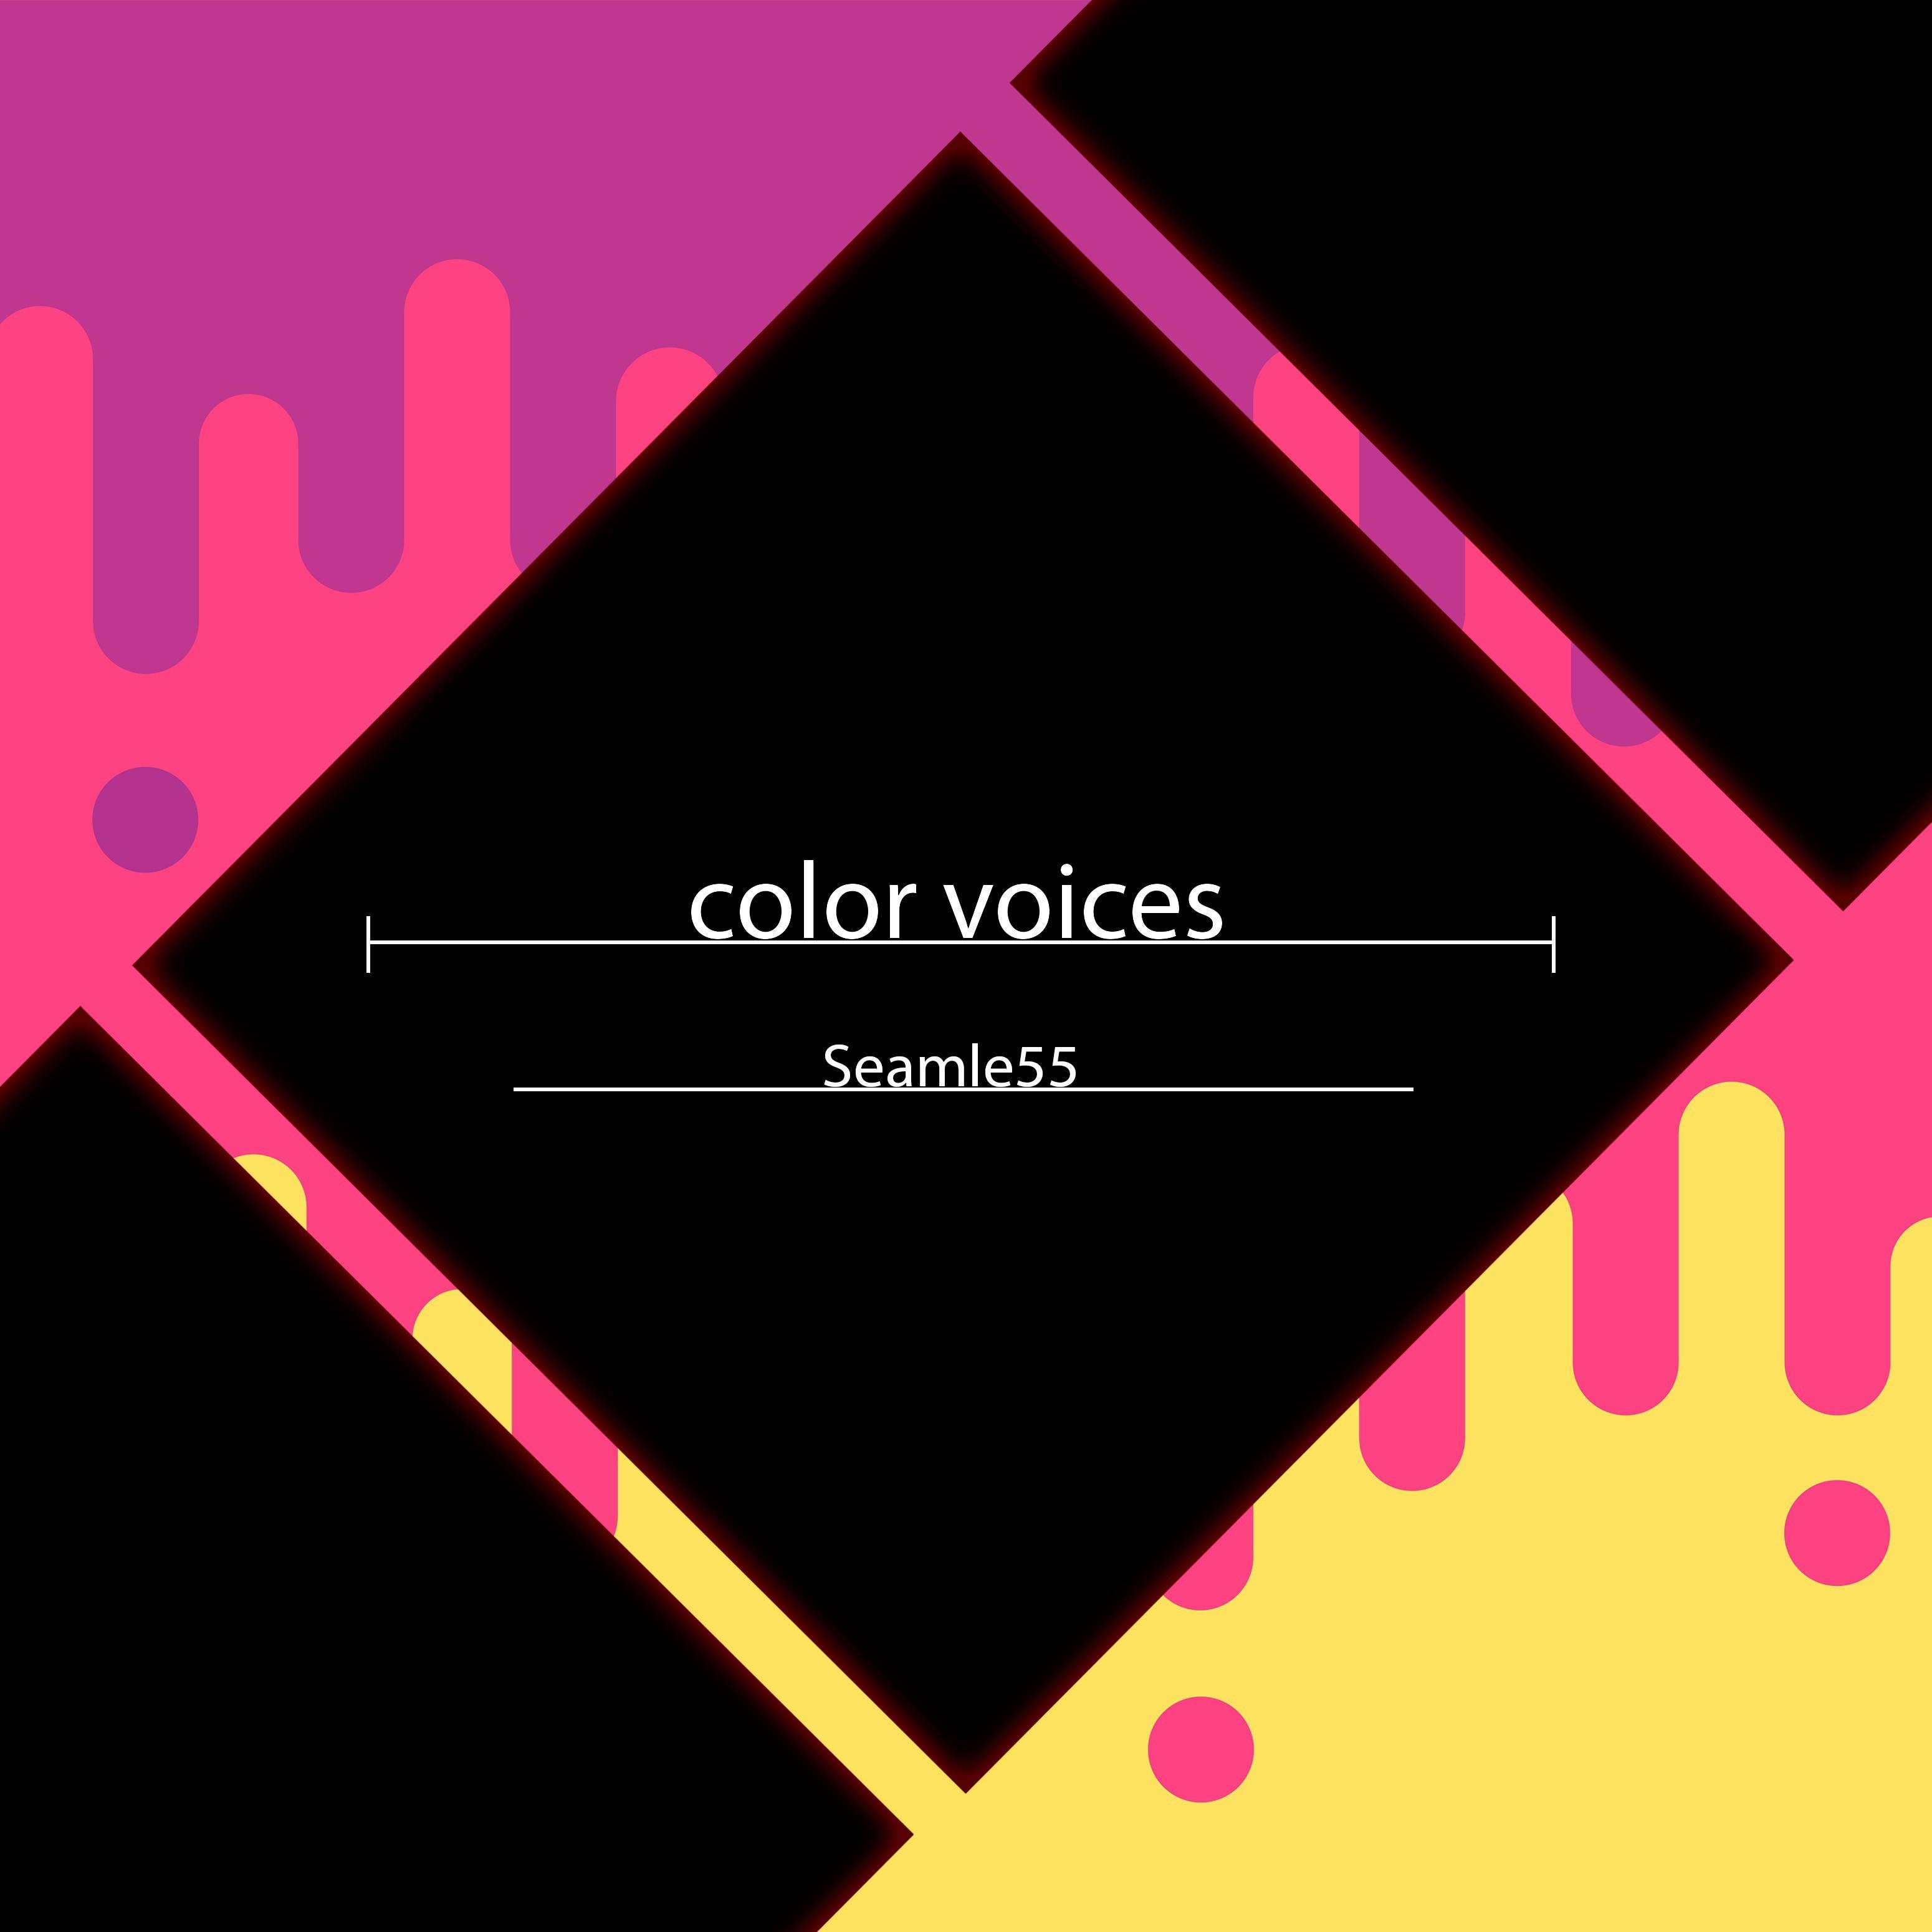 Voice colouring. Coloured Voices. Voice of Color. Voice Coloring. Four Voice Colors.